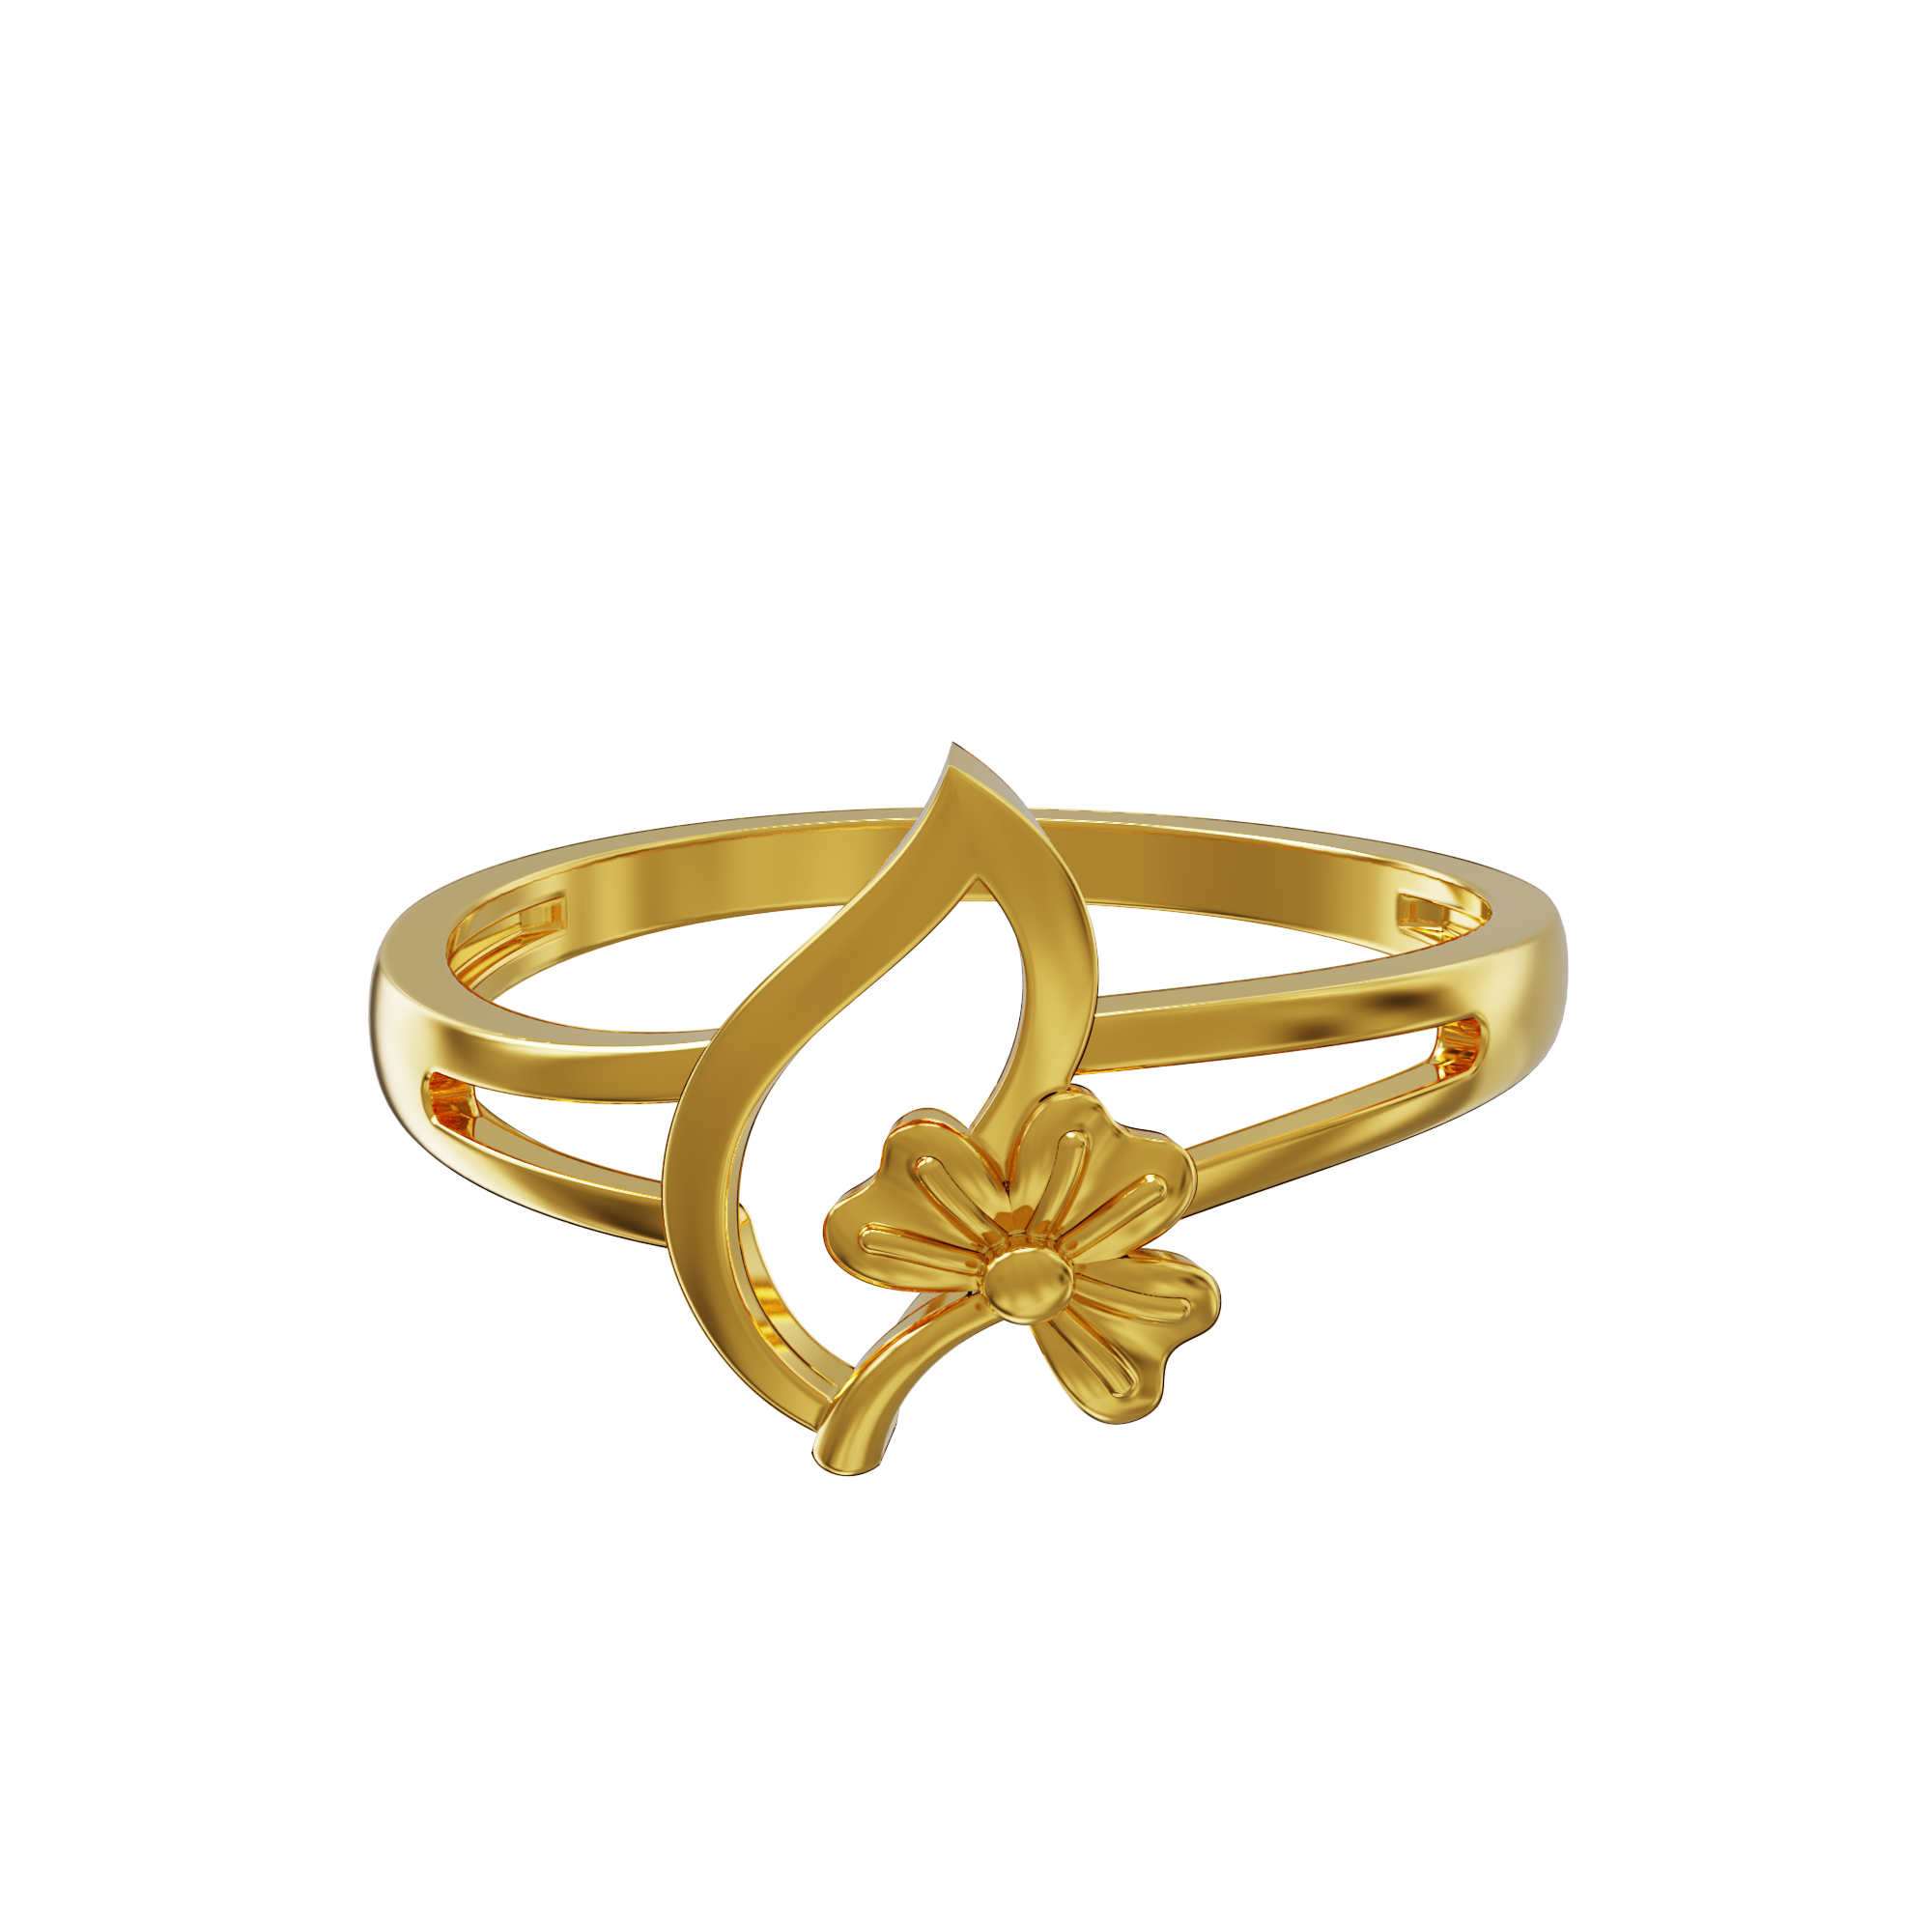 Plain Gold Couple Rings at best price in Vadodara by Devnandan Corporation  | ID: 2851121146155